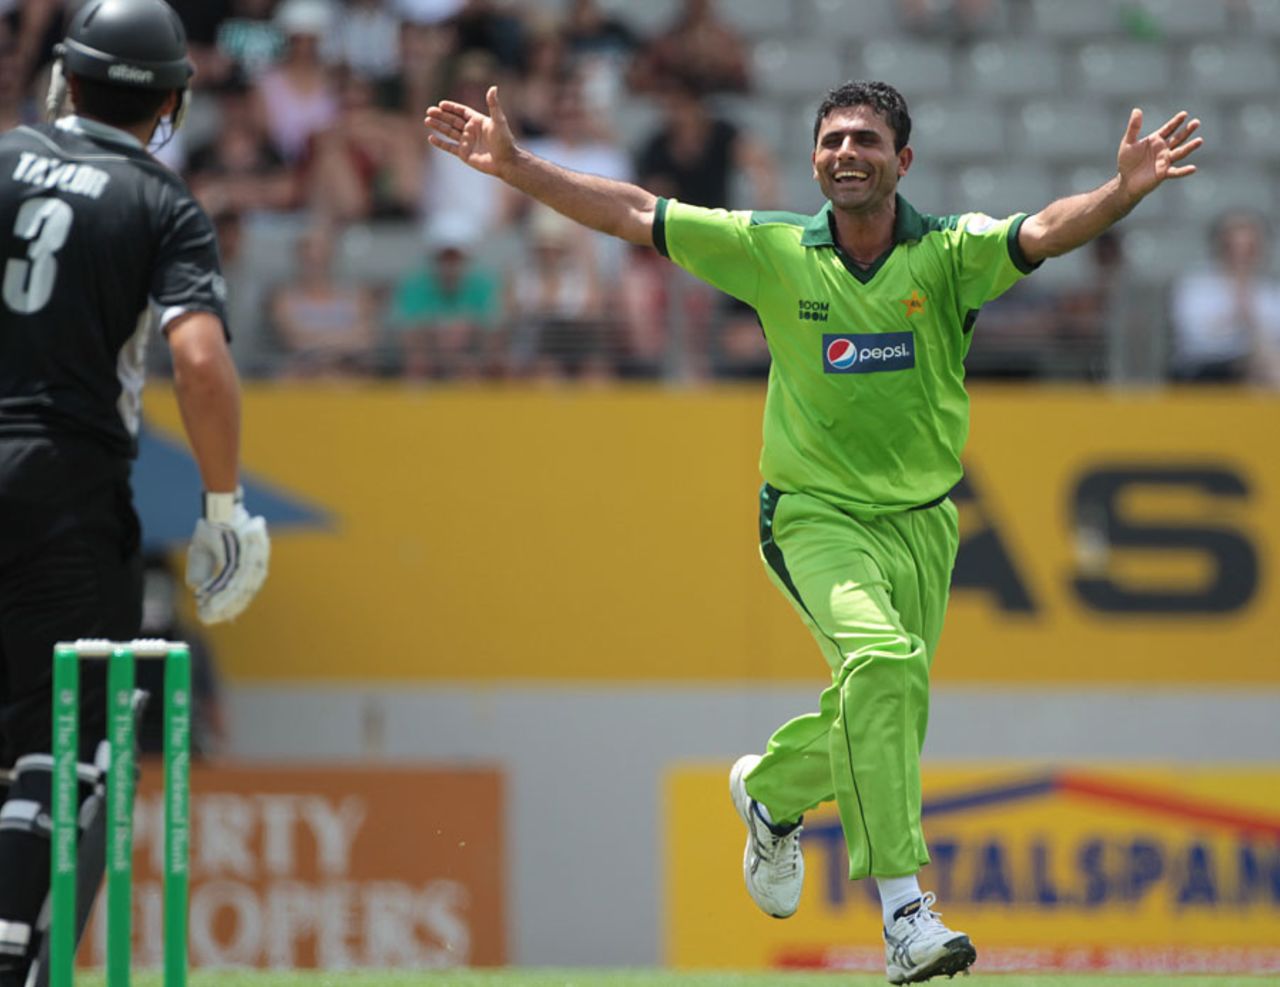 Abdul Razzaq sends Ross Taylor back, New Zealand v Pakistan, 6th ODI, Auckland, February 5, 2011